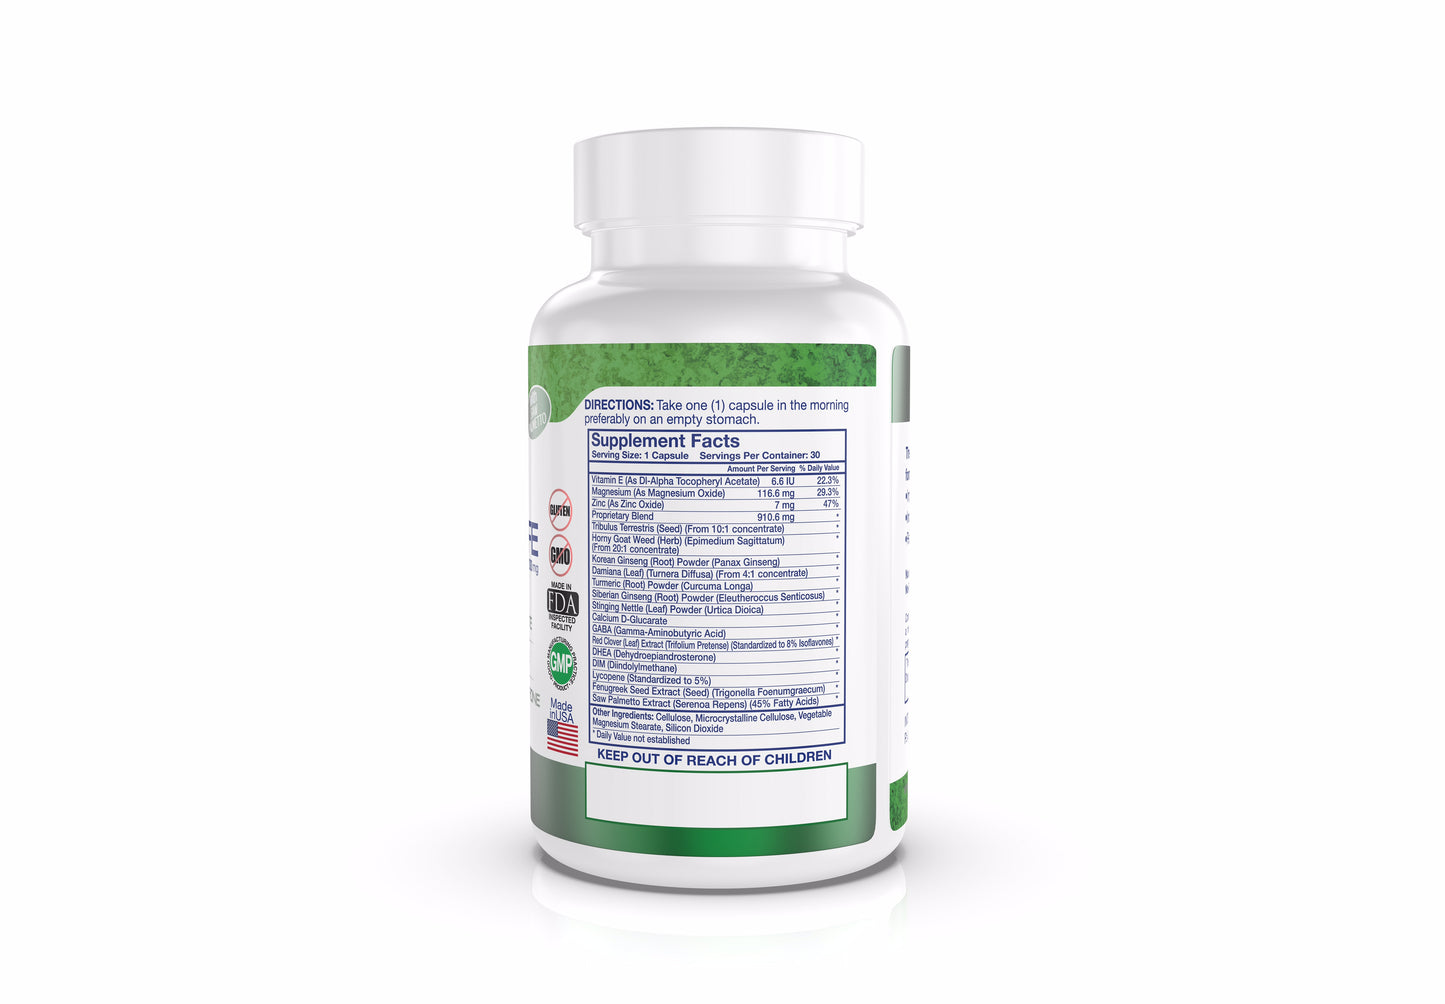 Intenergy USA Prosta-Life 30 CT Supplement Facts Bottle